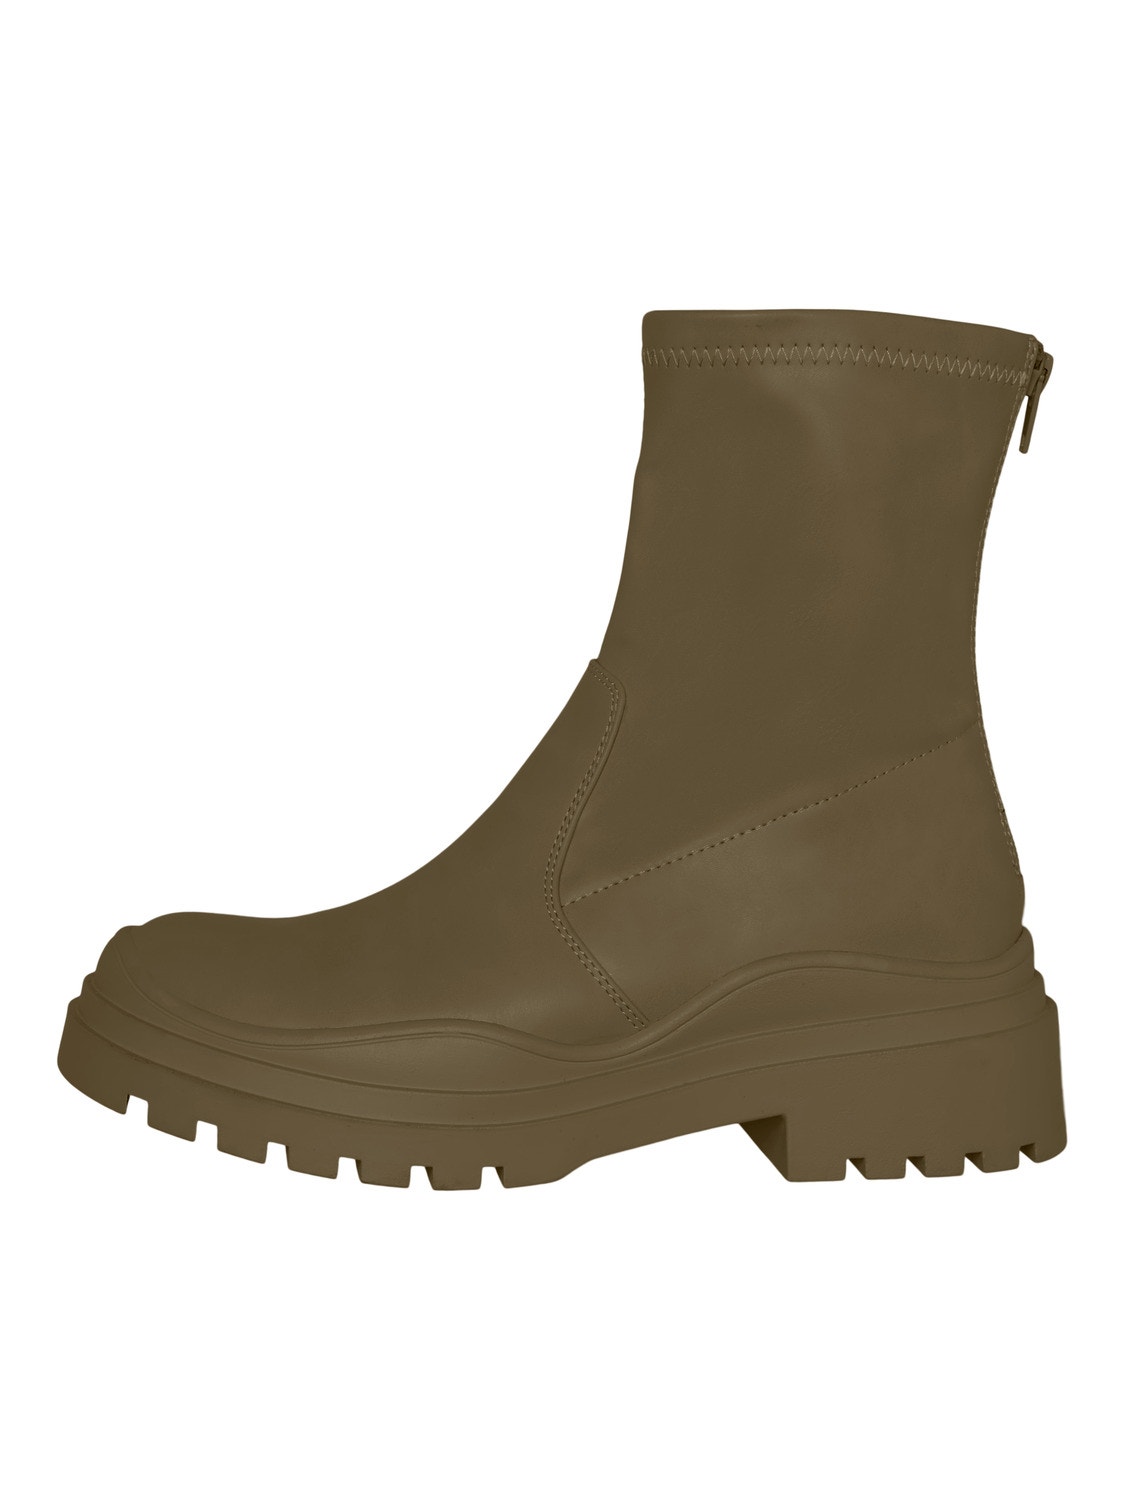 Vero Moda Boots -Dark Olive - 10276066